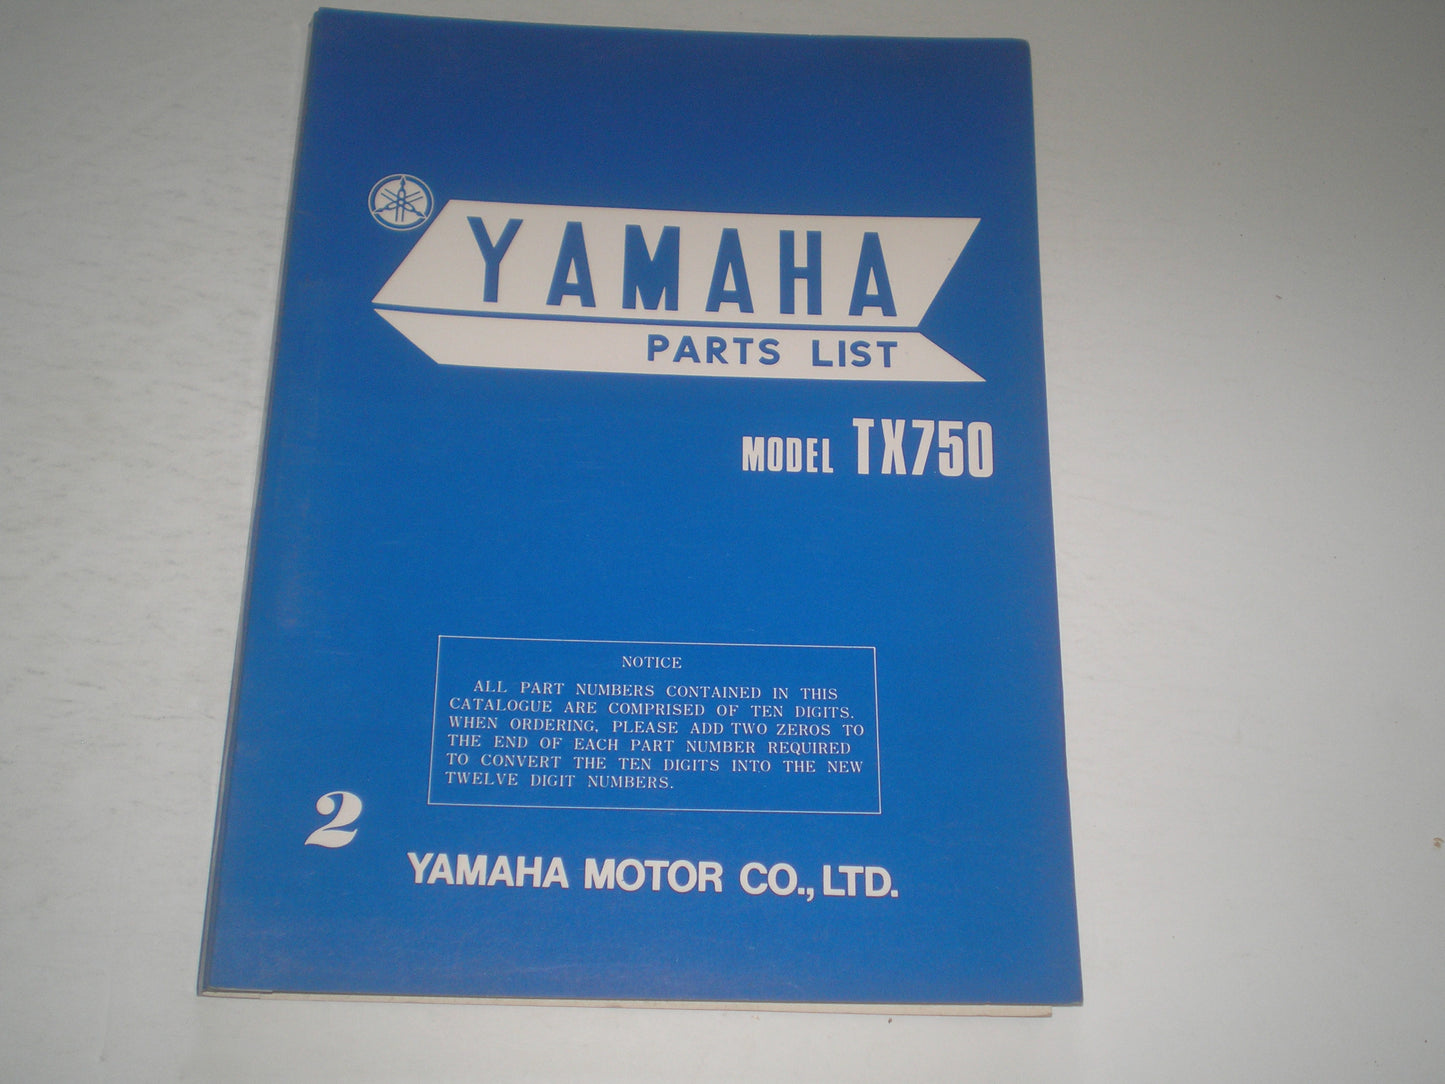 YAMAHA TX750 1973  Parts List / Catalogue  341-28198-62  LIT-10013-41-00  #1696